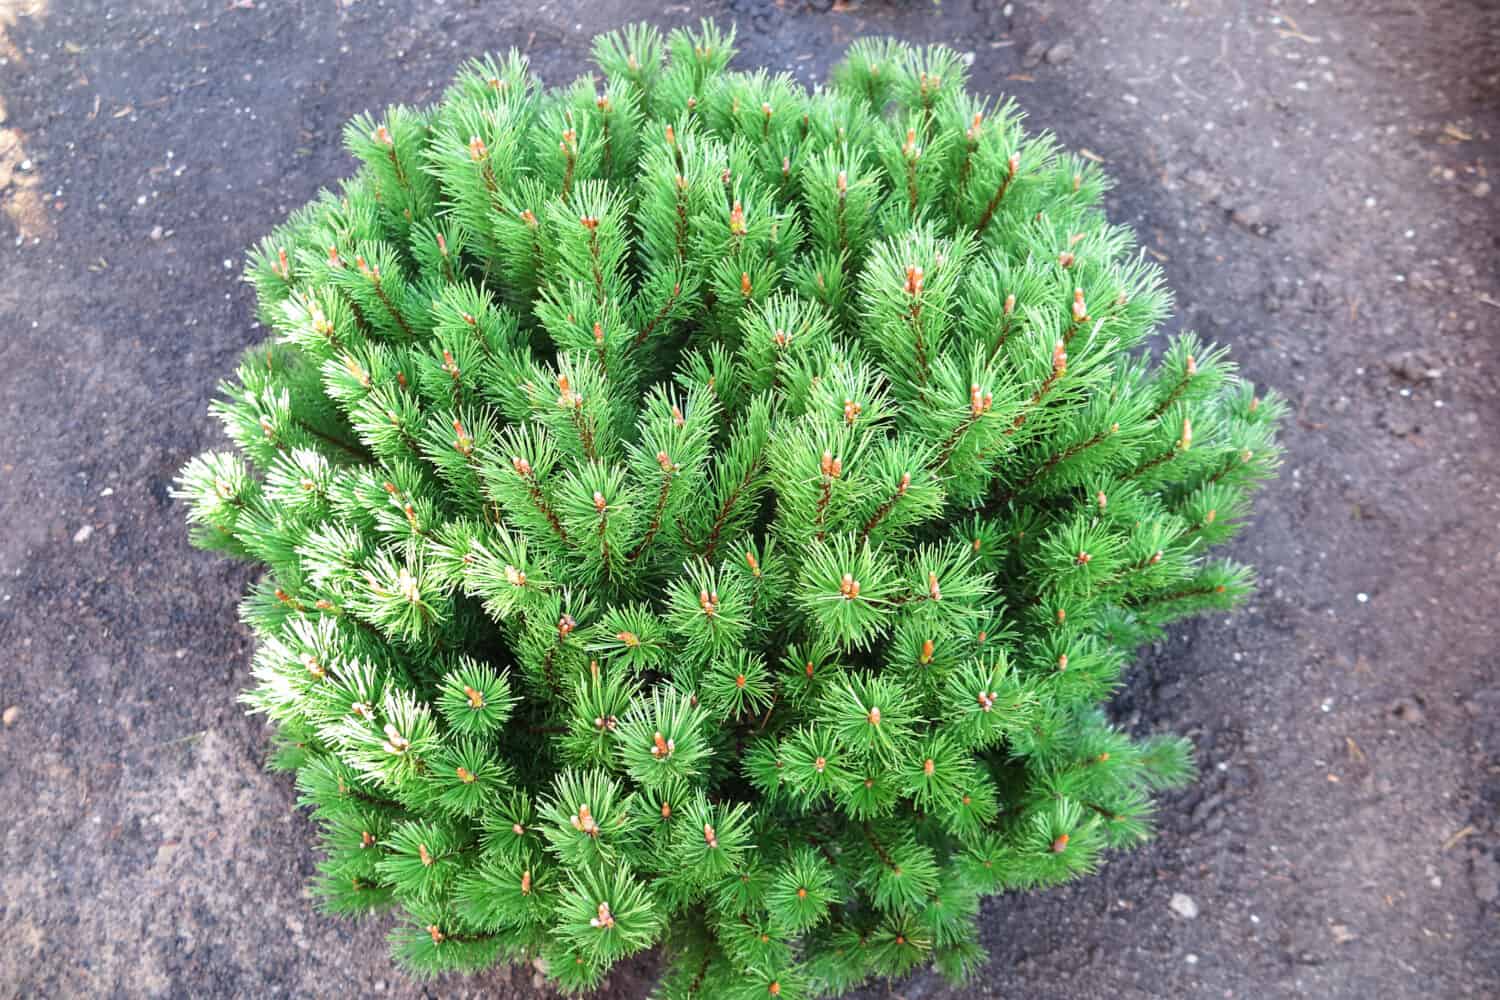 Dwarf cultivar pine (Pinus mugo "Mops") in the garden